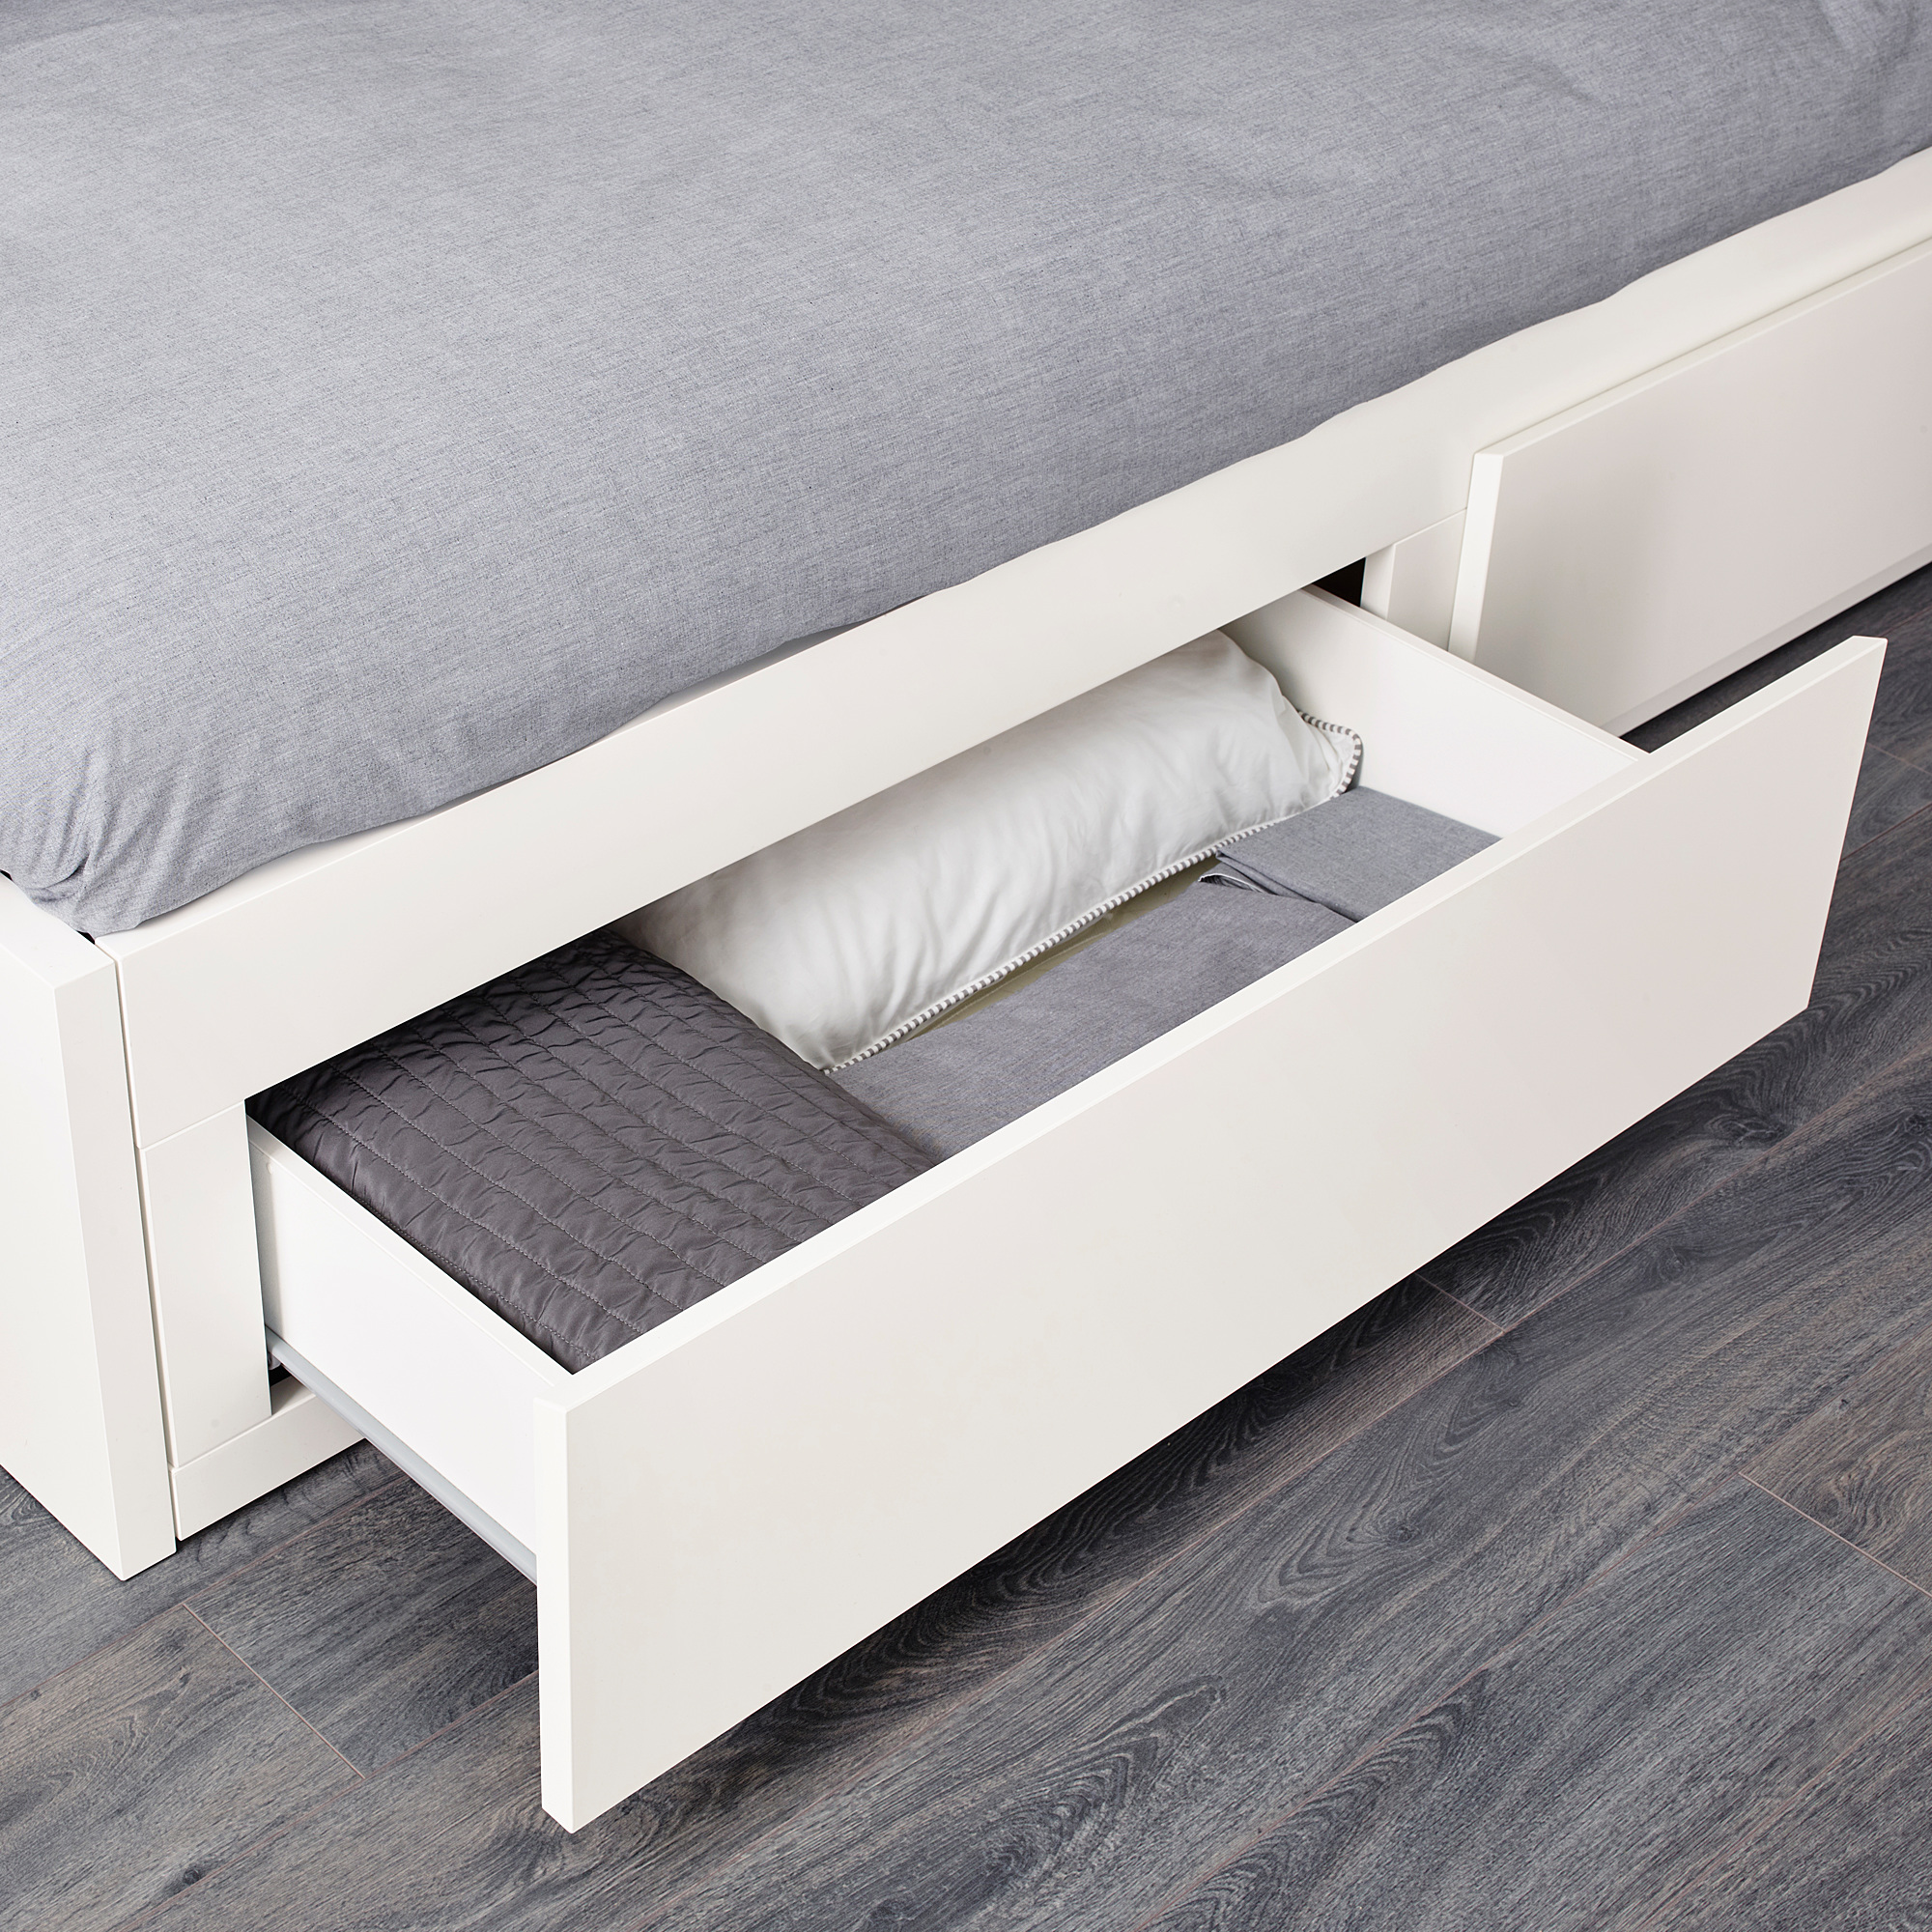 FLEKKE day-bed frame with 2 drawers